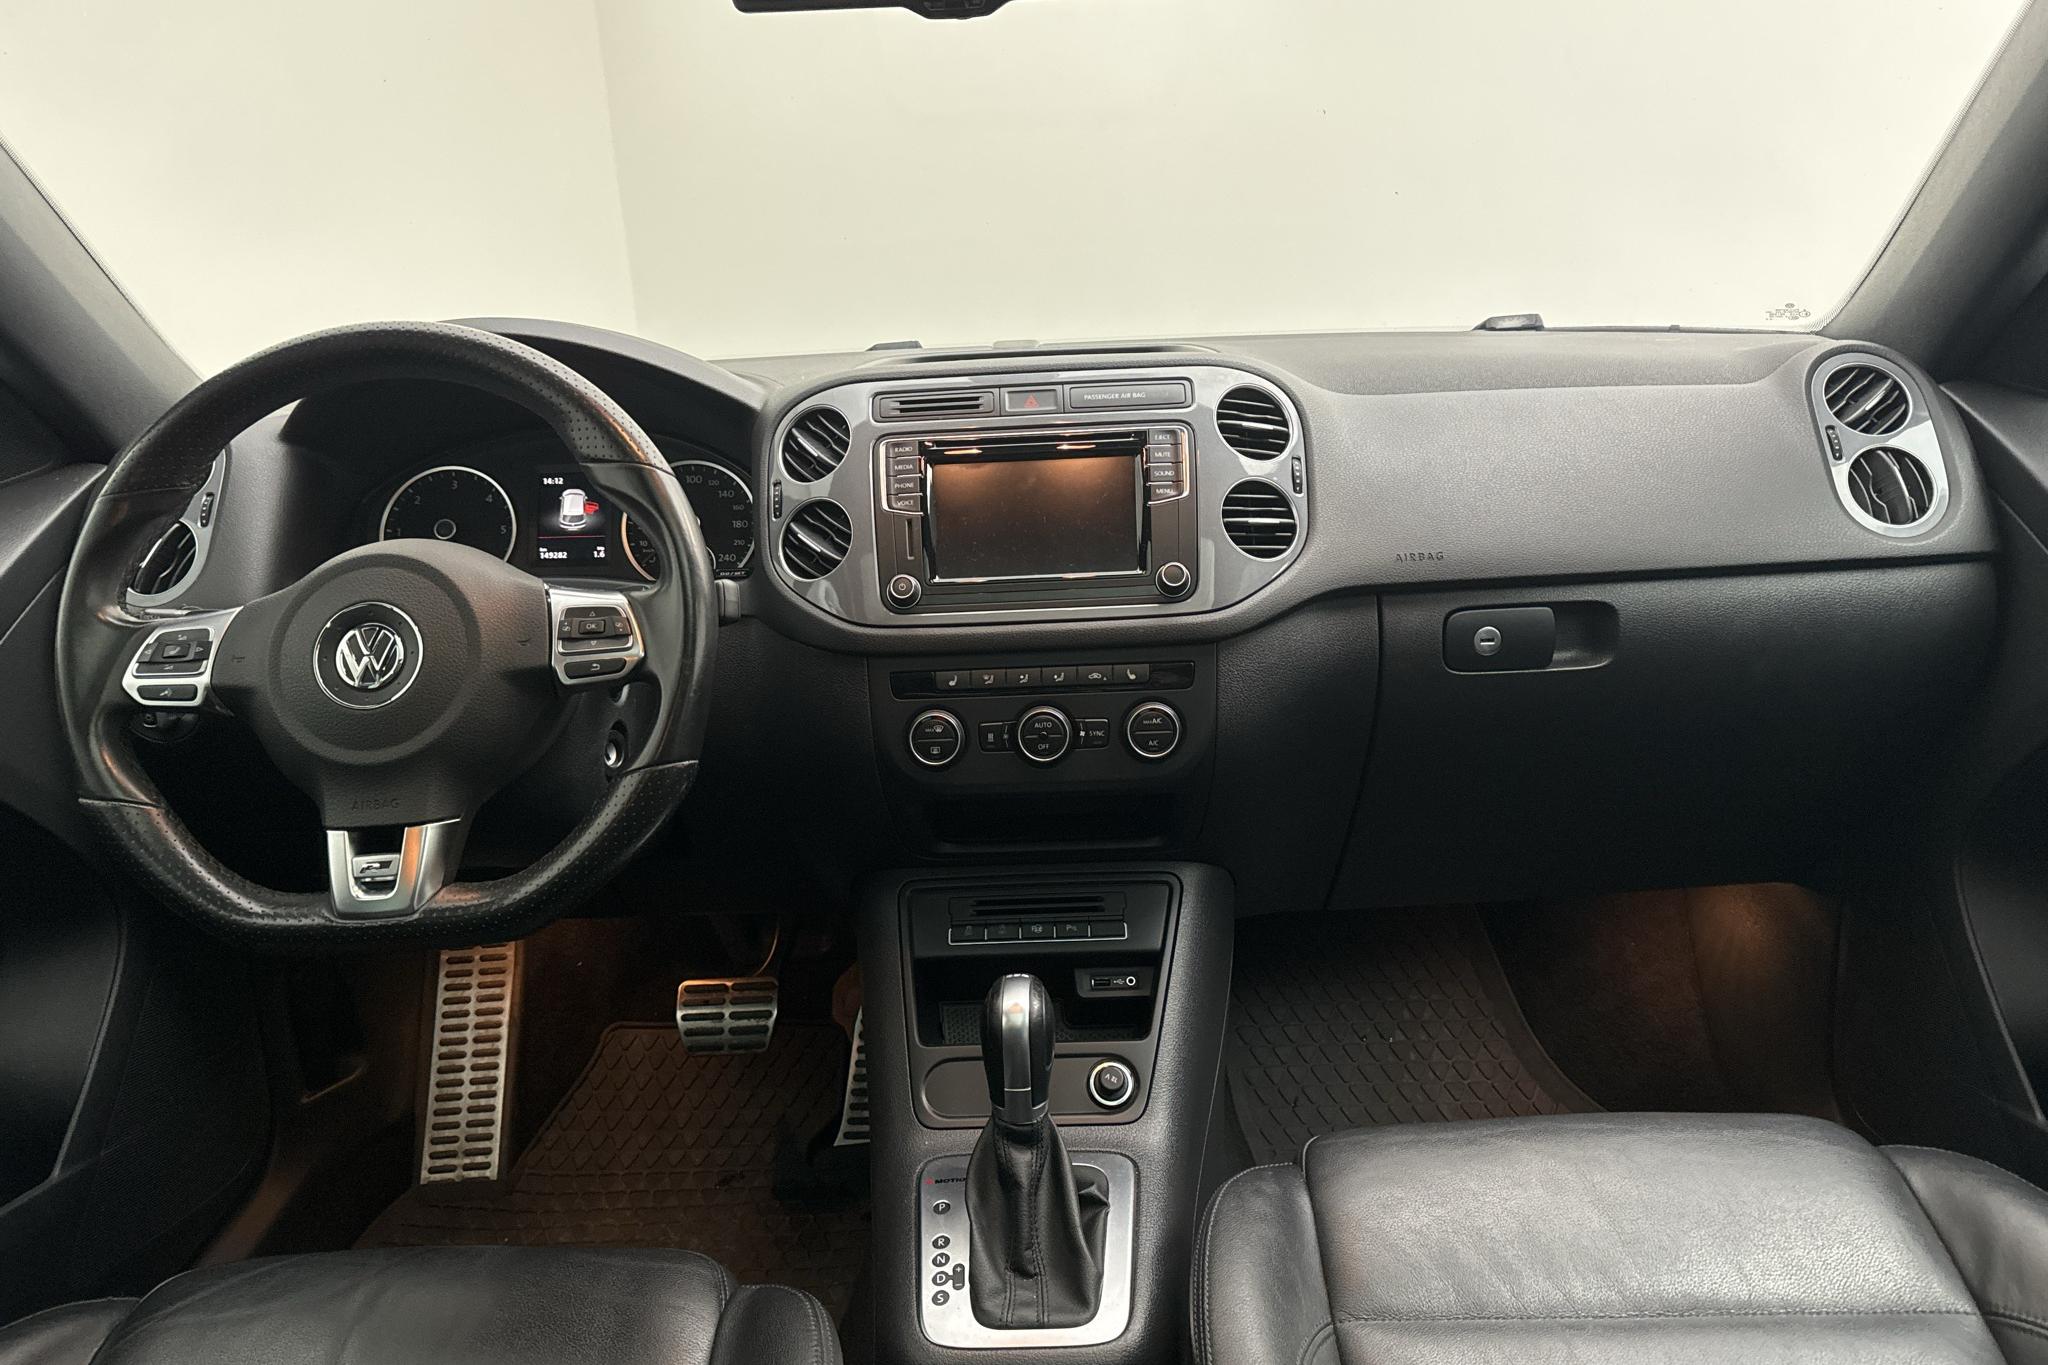 VW Tiguan 2.0 TDI 4MOTION BlueMotion Technology (184hk) - 149 290 km - Automaatne - valge - 2016